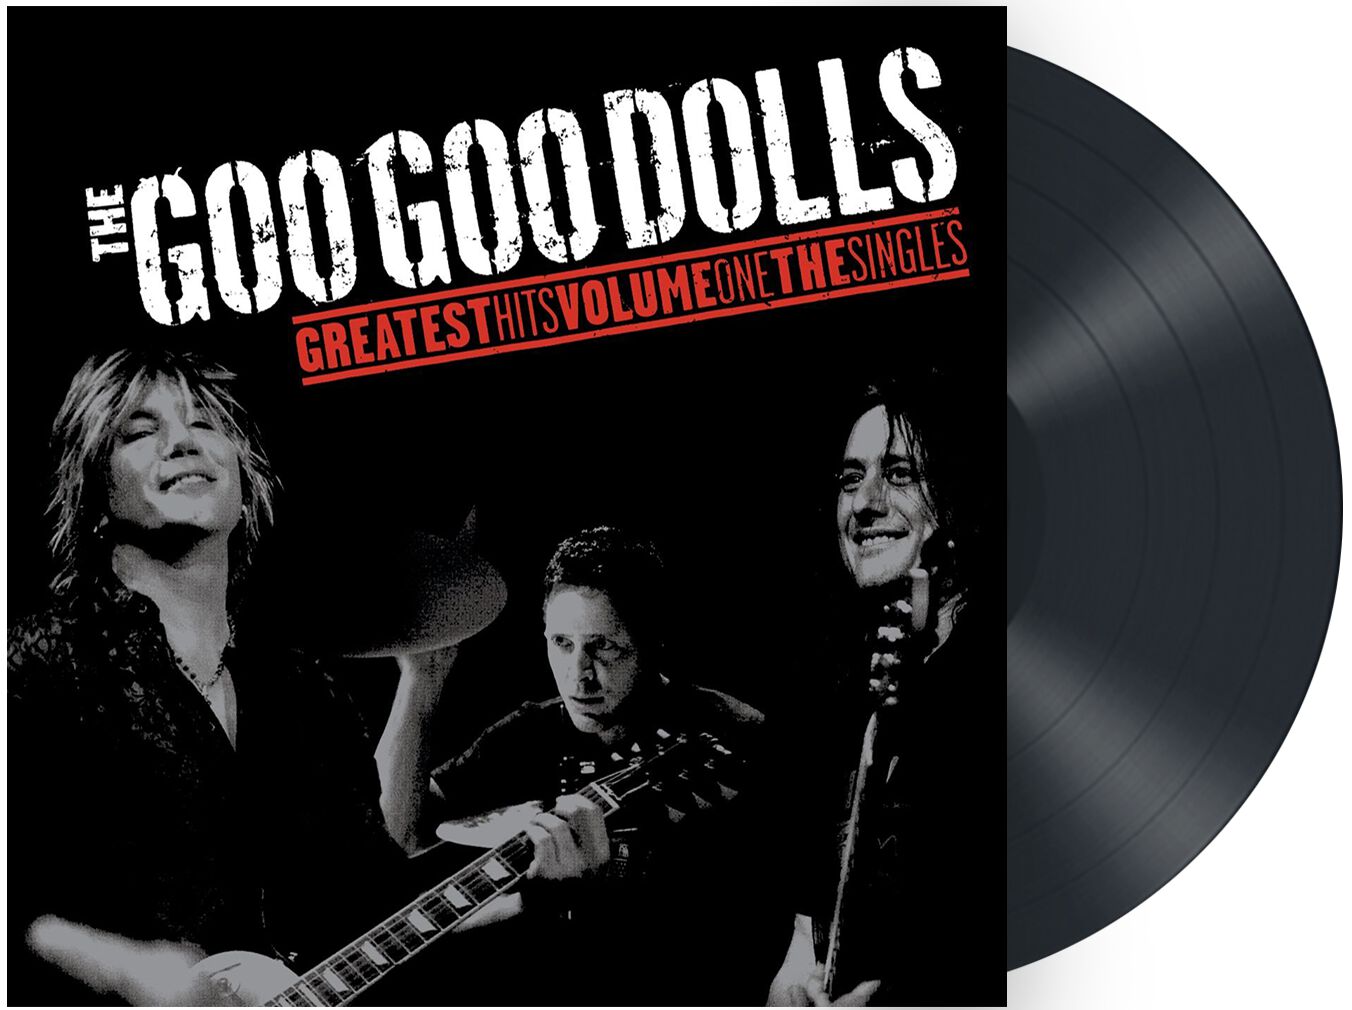 Image of Goo Goo Dolls Greatest hits volume one - The singles LP schwarz